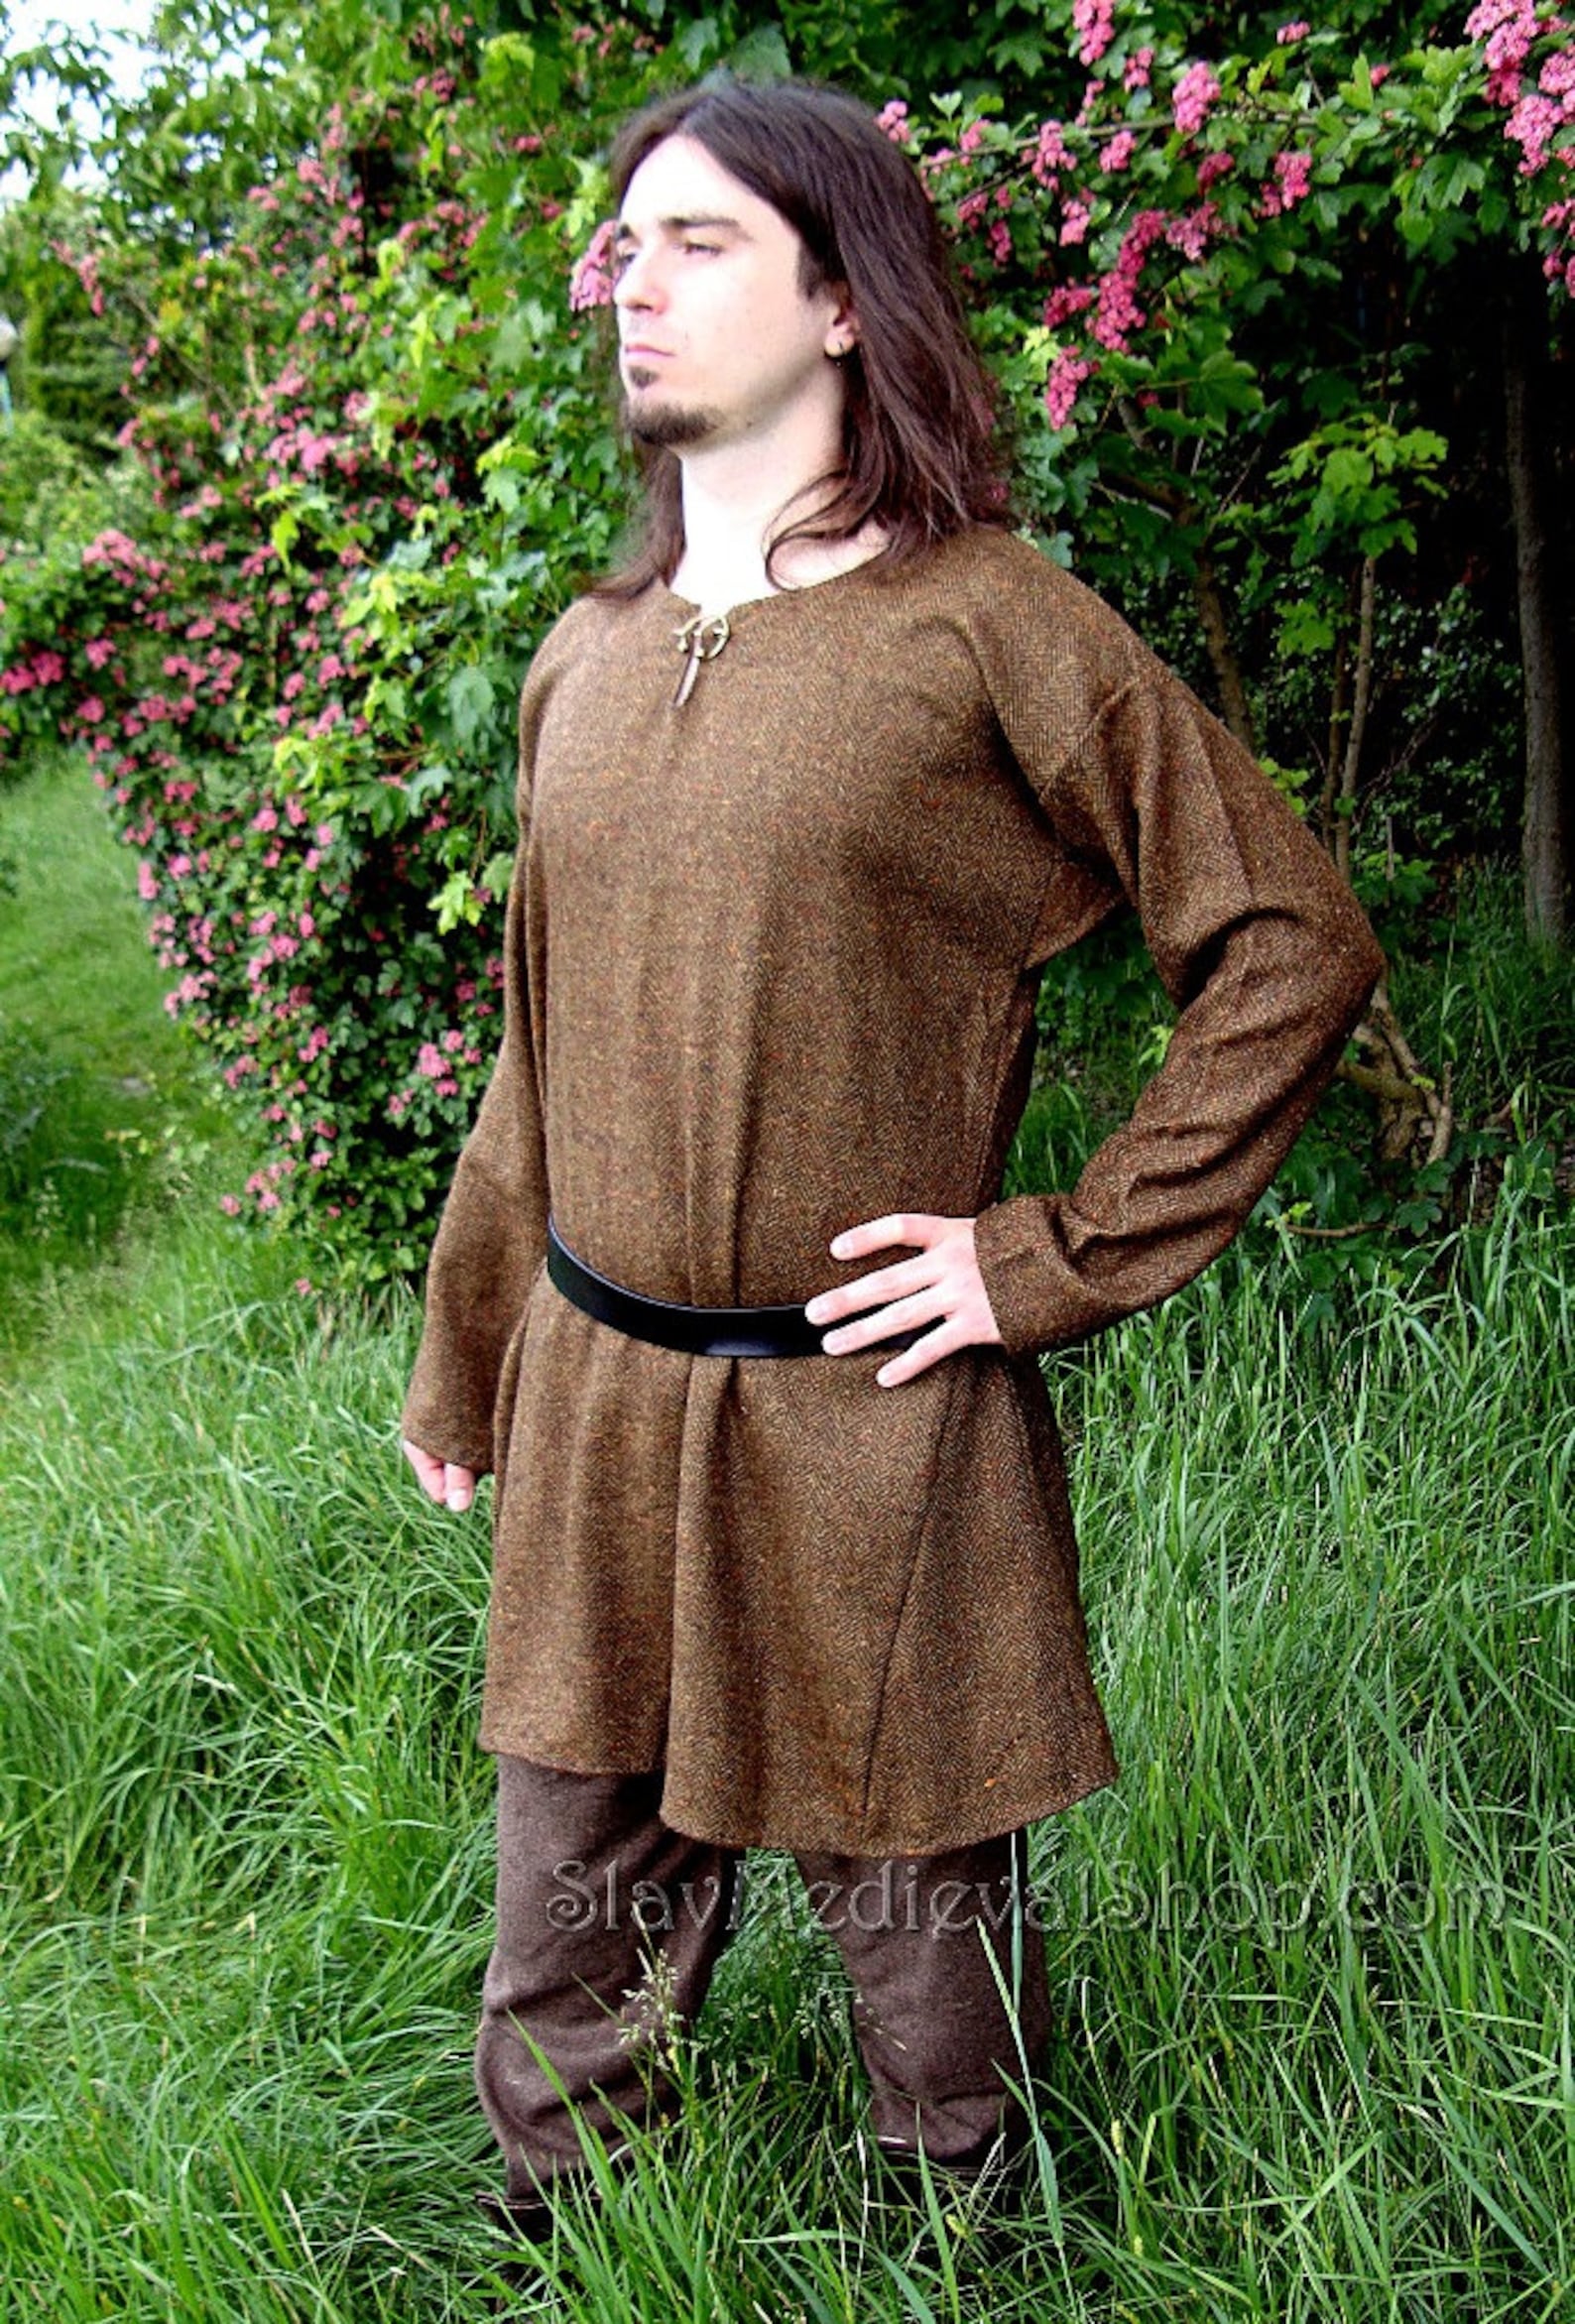 Viking Tunic of Birka Early Medieval Scandinavian tunic | Etsy